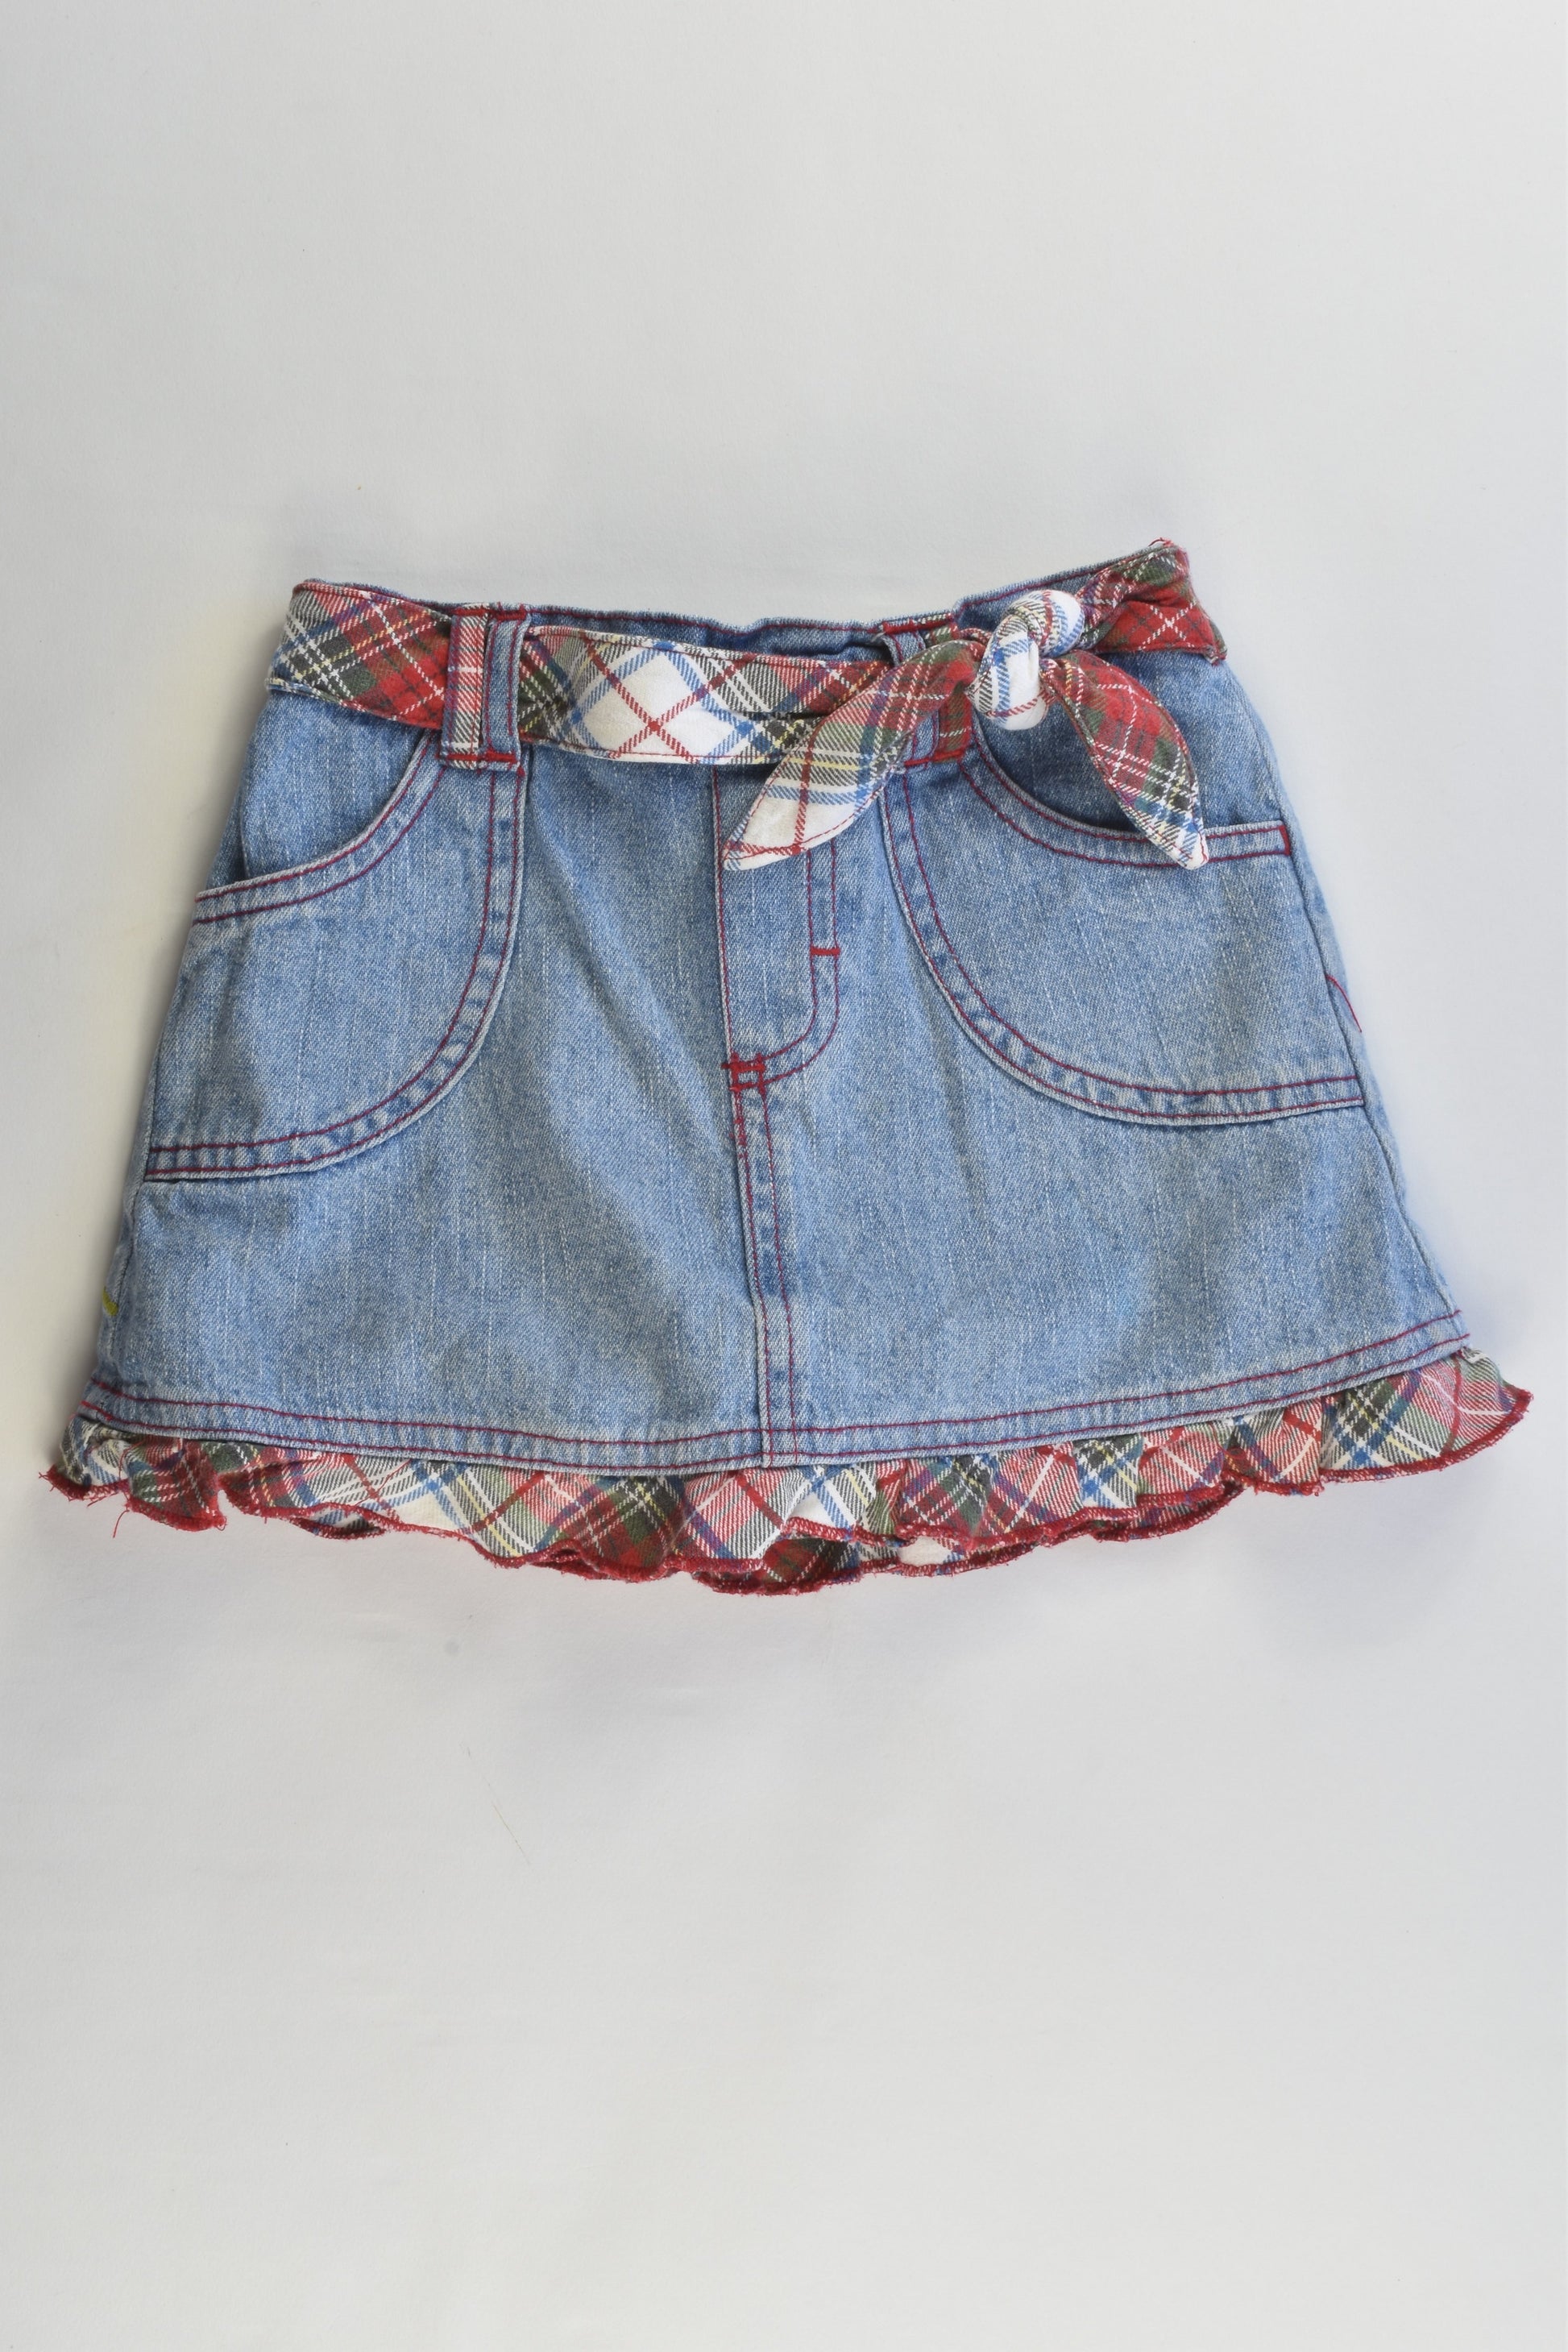 Kids Headquarters Size 4 Vintage Denim Skirt with Shorts Underneath